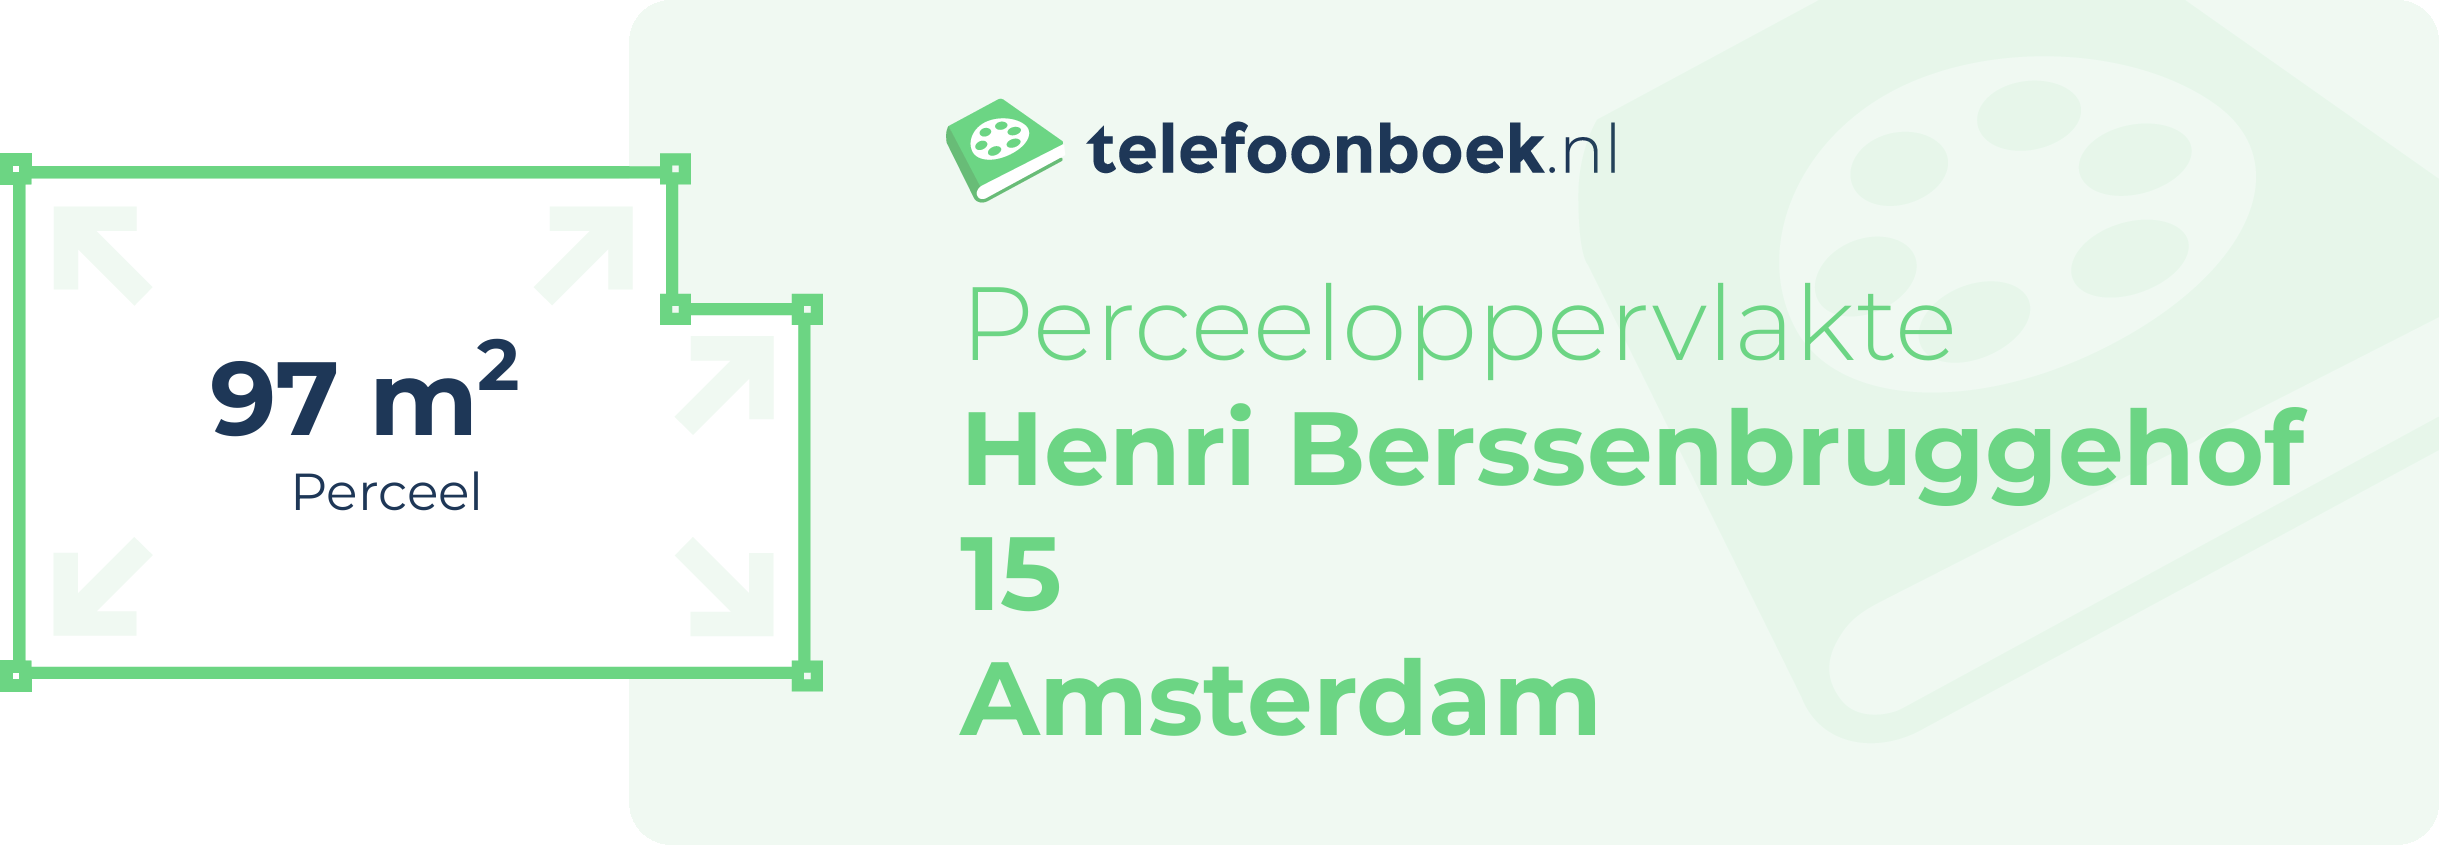 Perceeloppervlakte Henri Berssenbruggehof 15 Amsterdam